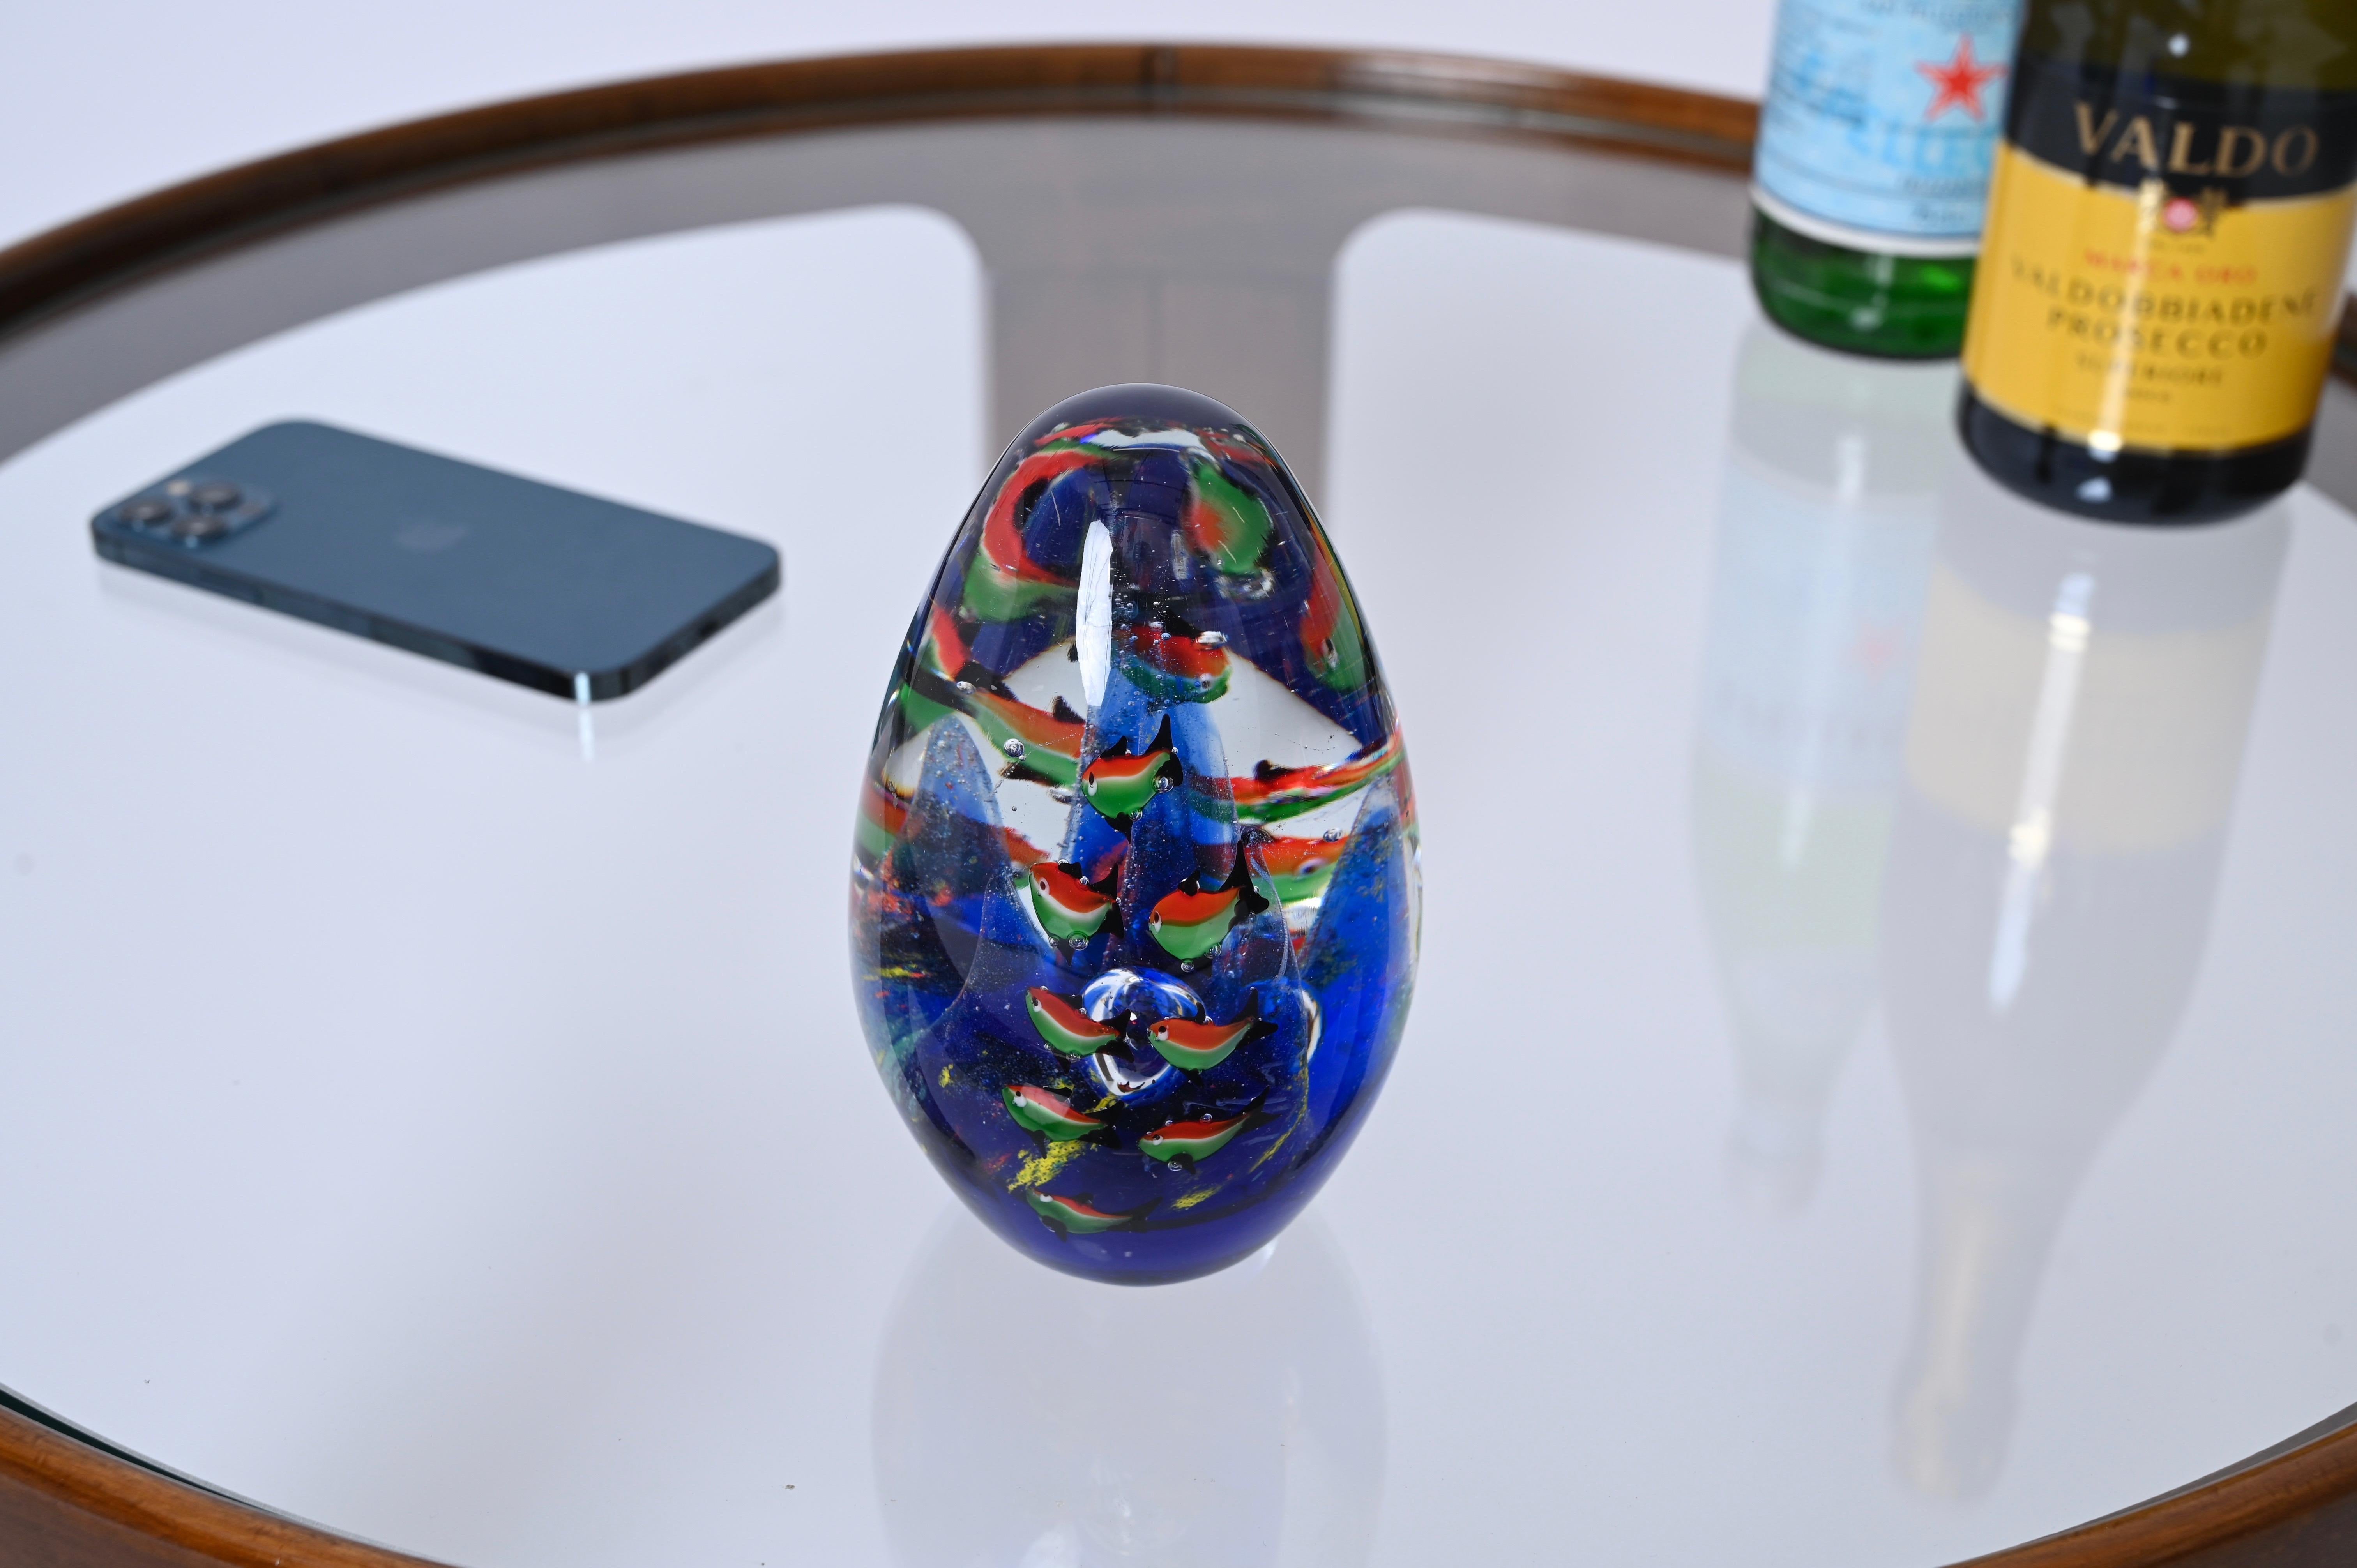 Cenedese Sculpture artistique en verre de Murano avec œuf 